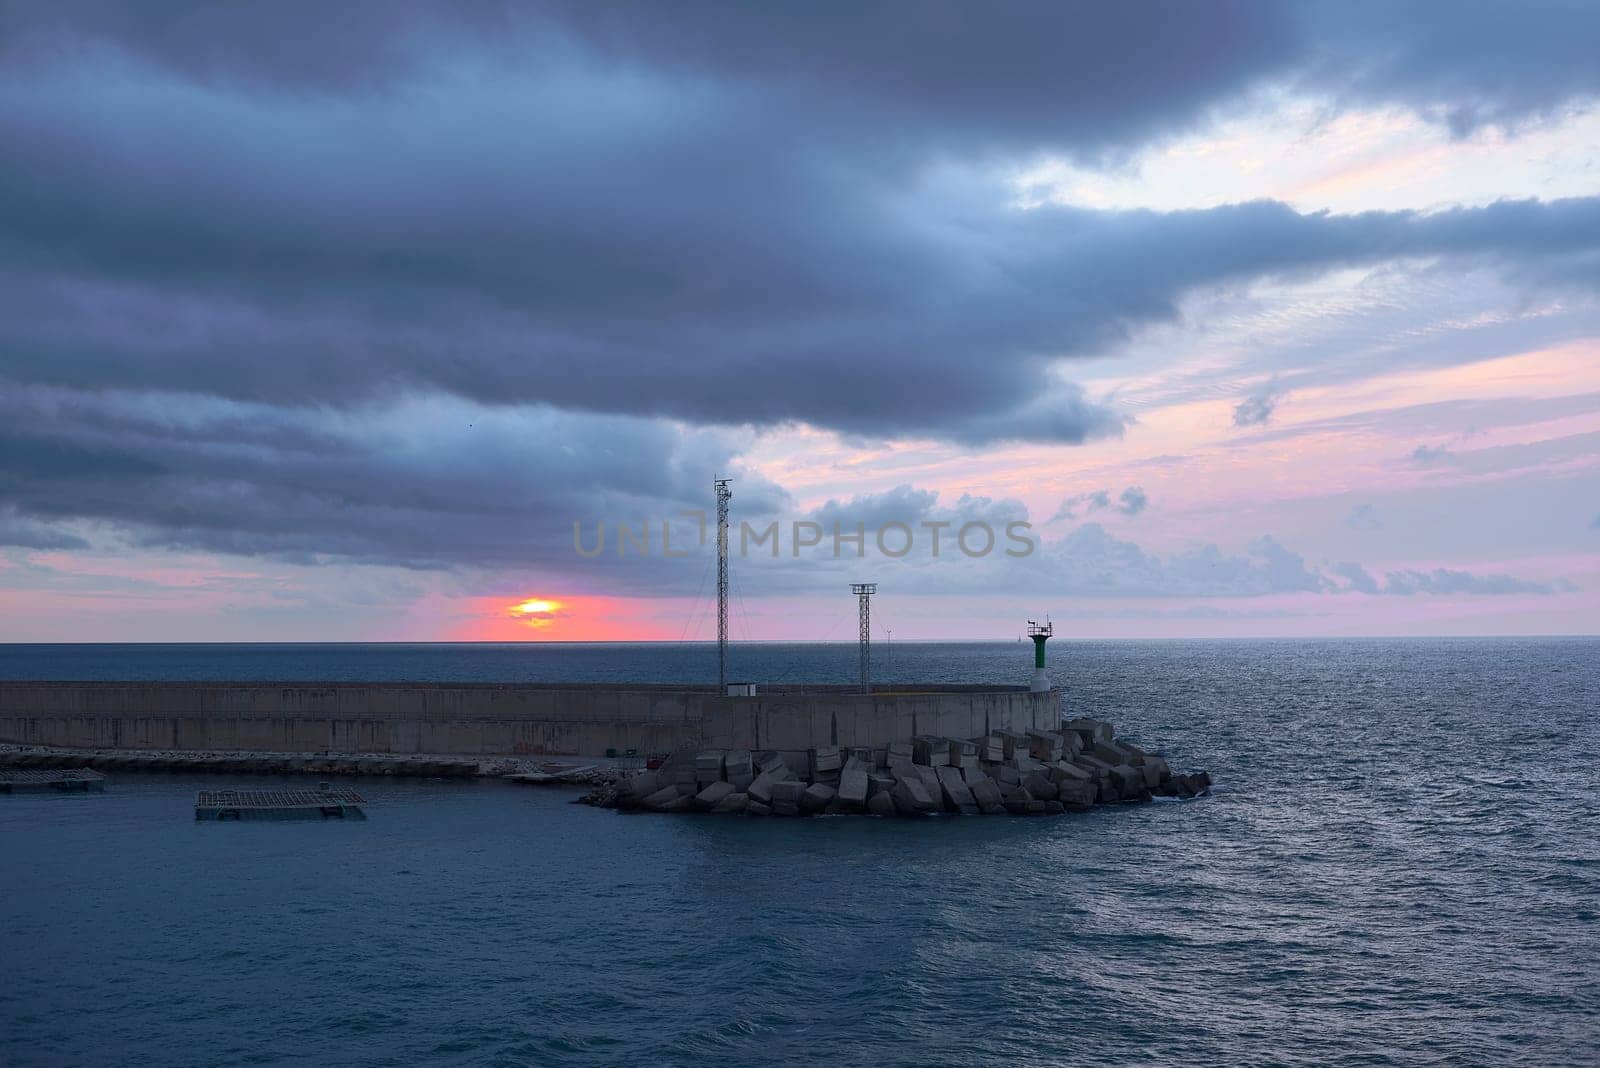 Sunrise from green lighthouse on maritime breakwater.Rocks, jetty, blue and cold tones, orange sunshine